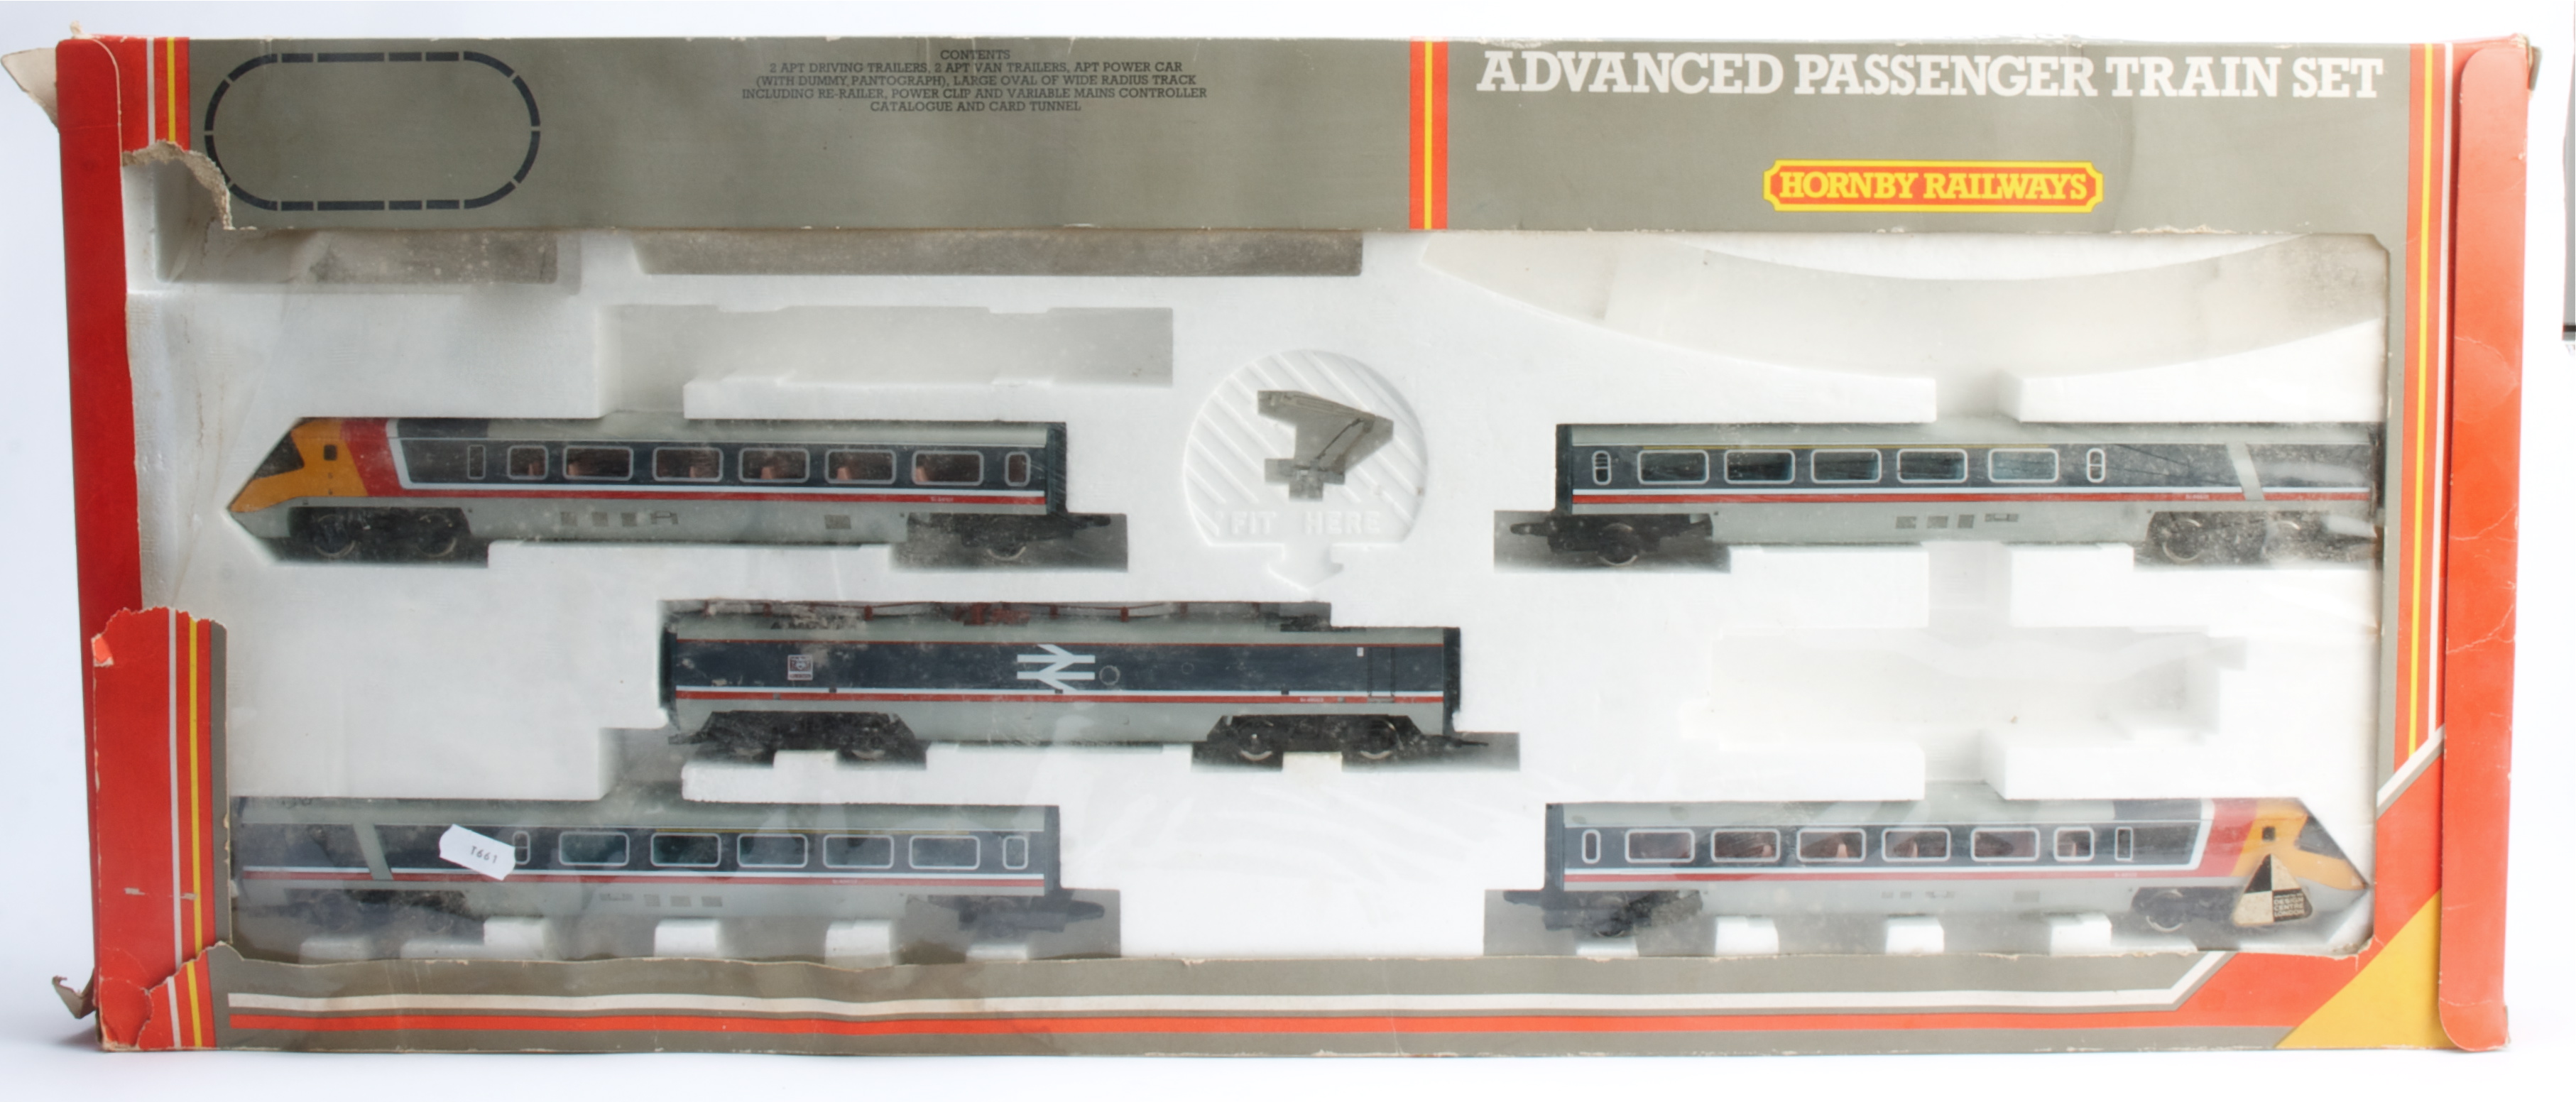 Hornby 00 Gauge R543 Advanced Passenger Train, comprising 5-Car unit with pantograph, in original